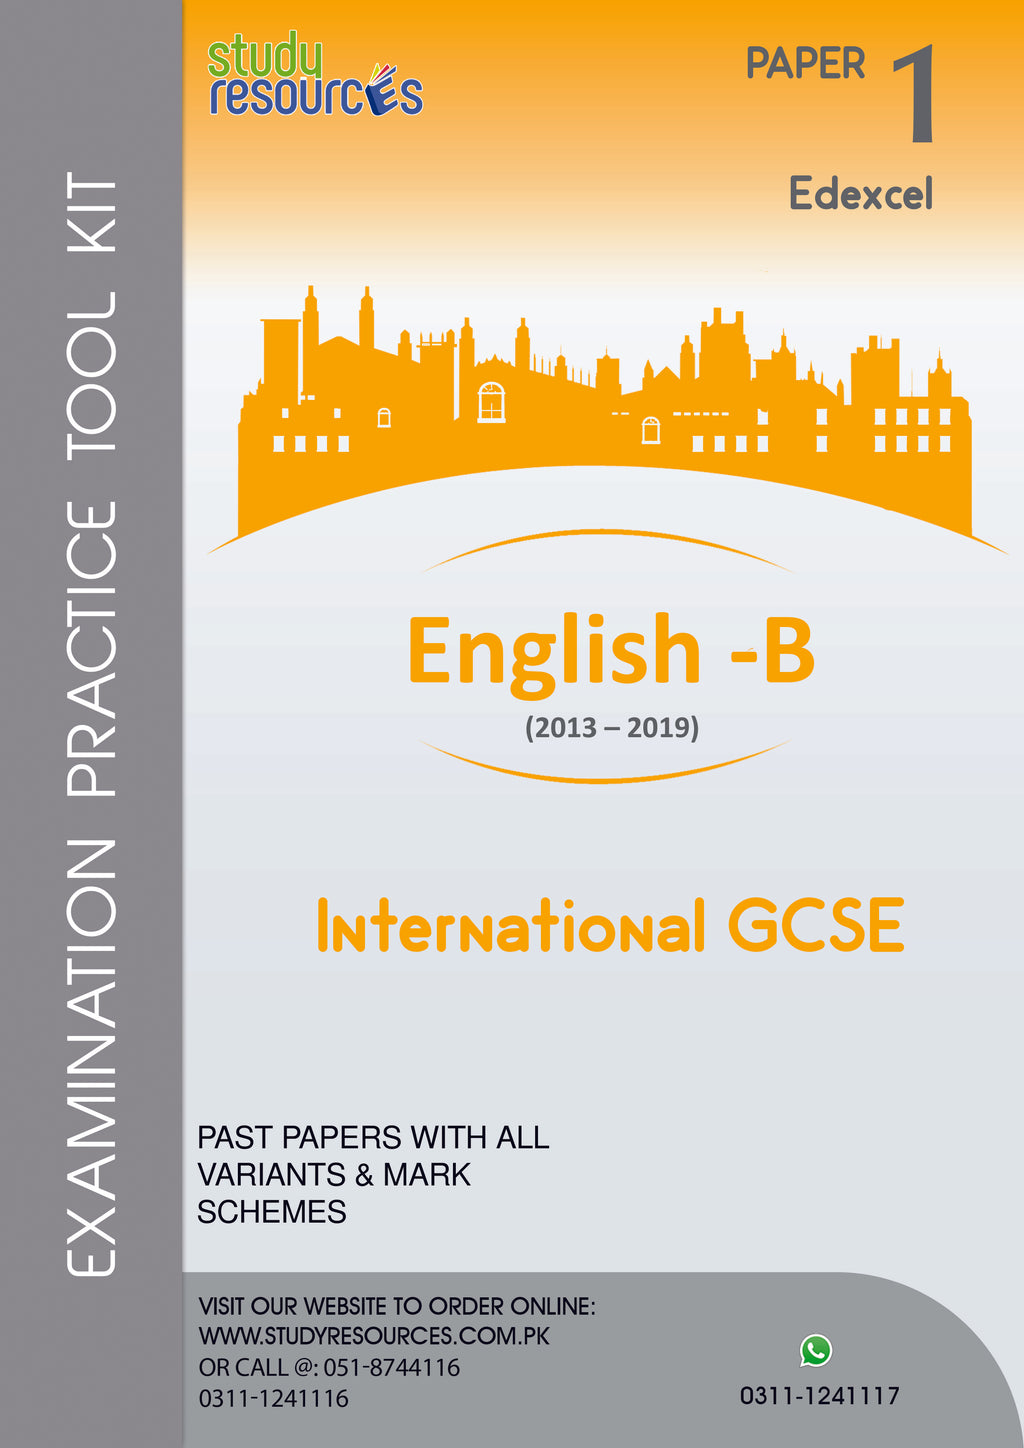 Edexcel IGCSE English "B" Paper-1 Past Papers (2013-2019)